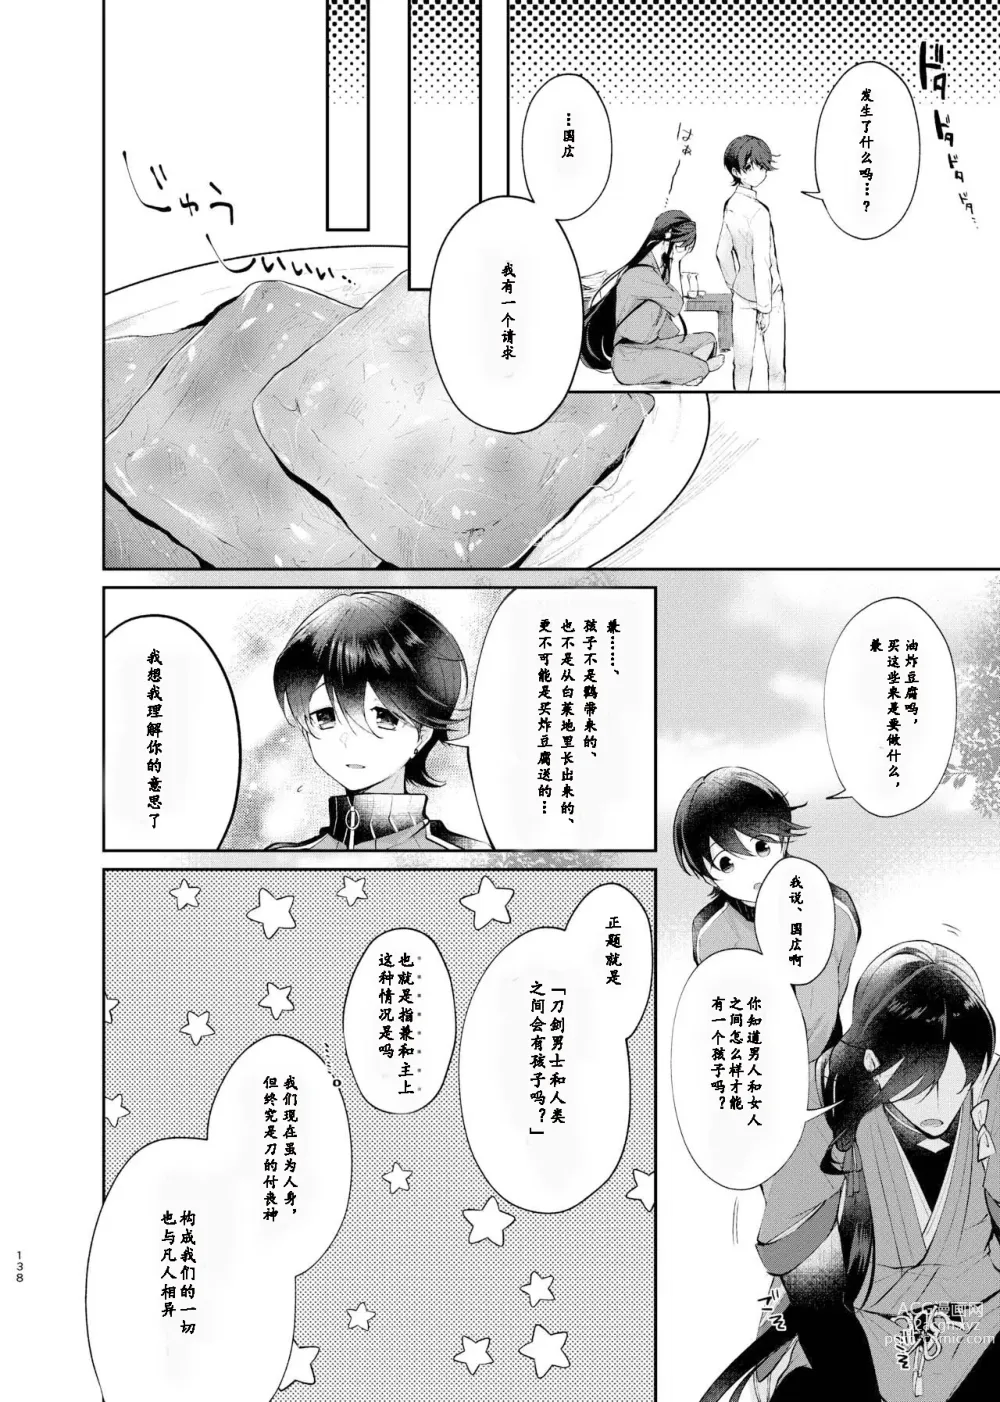 Page 9 of doujinshi 回响夜明